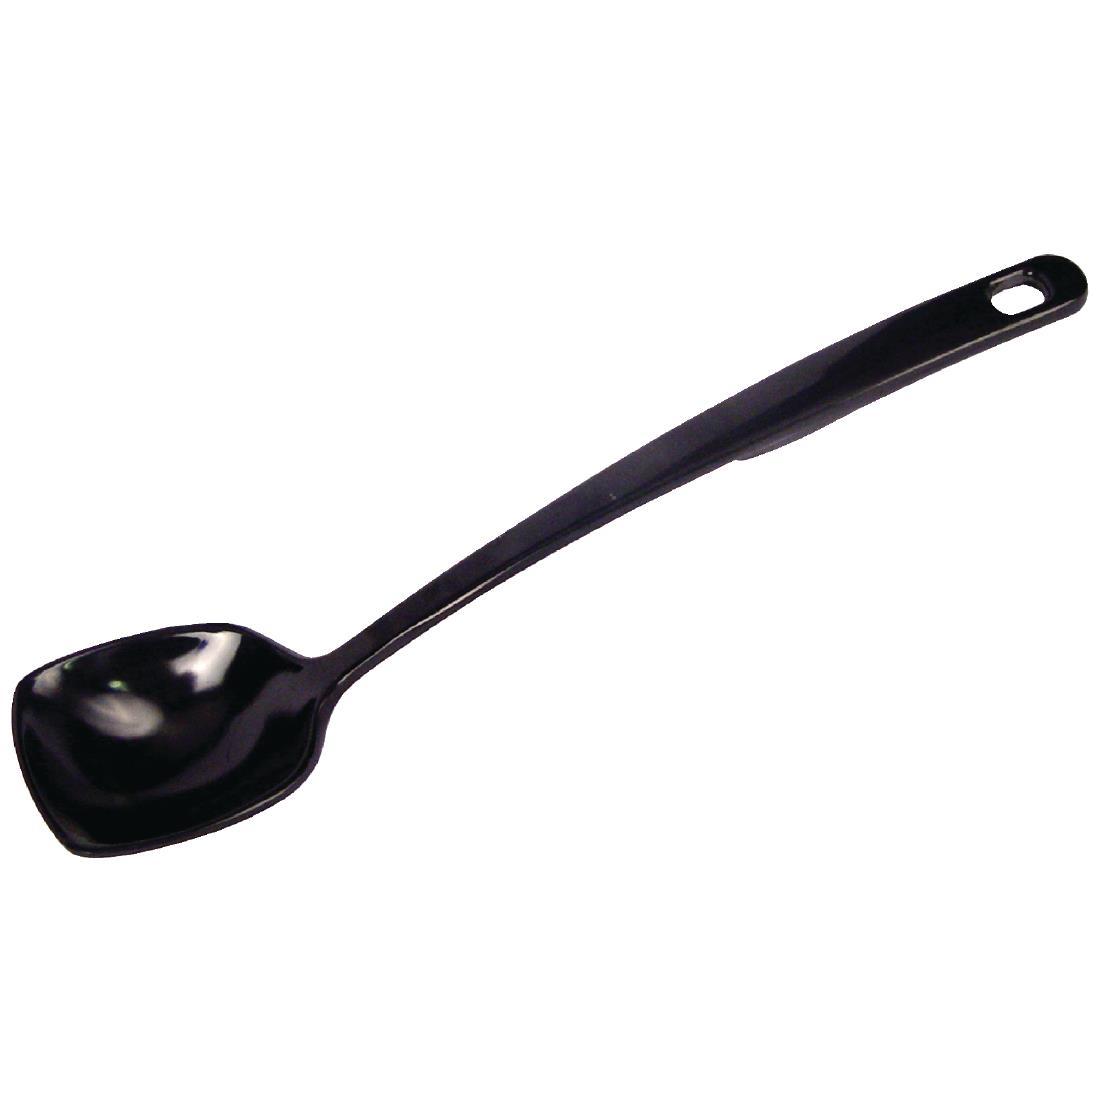 Long Black Serving Spoon - J644  - 1